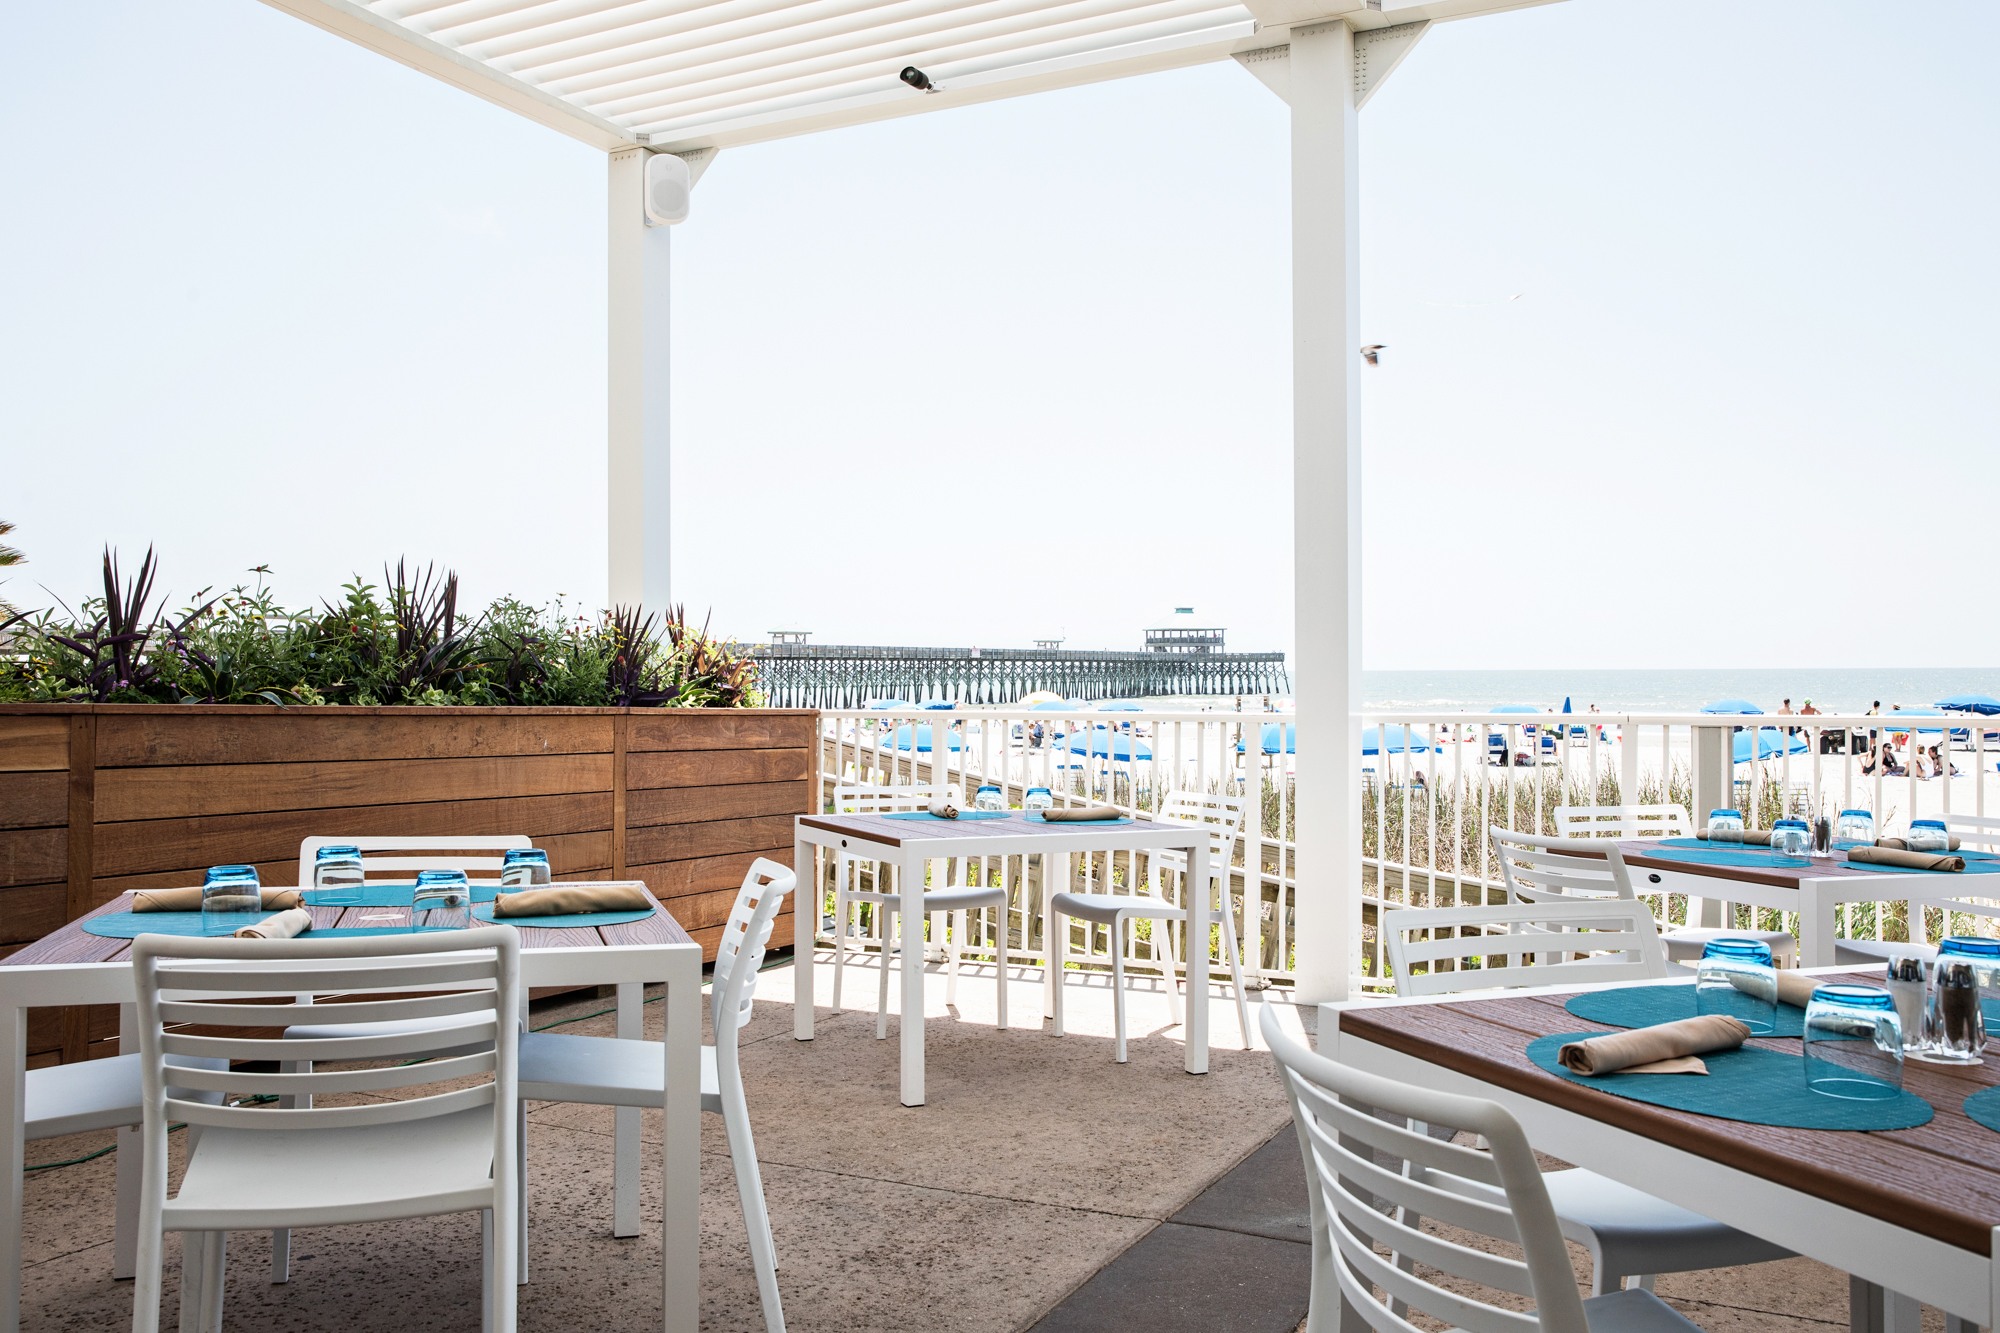 The Best Waterfront Restaurants in Charleston Charleston Guru